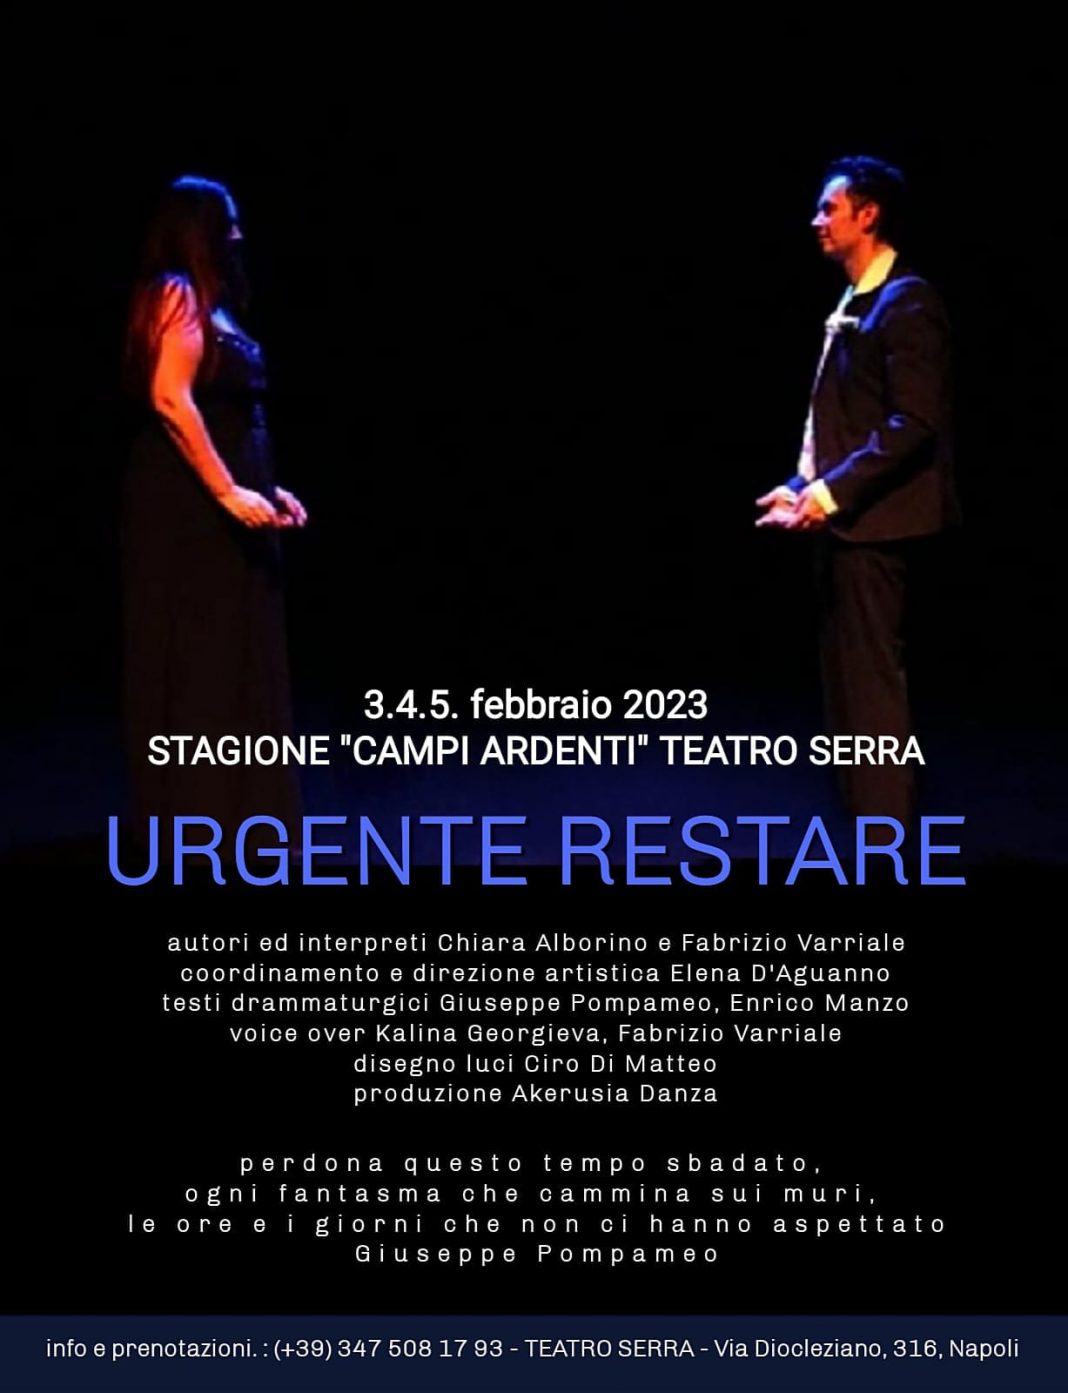 Urgente restarehttps://www.exibart.com/repository/media/formidable/11/img/b10/cs.TeatroSerra.UrgenteRestare-1068x1393.jpg